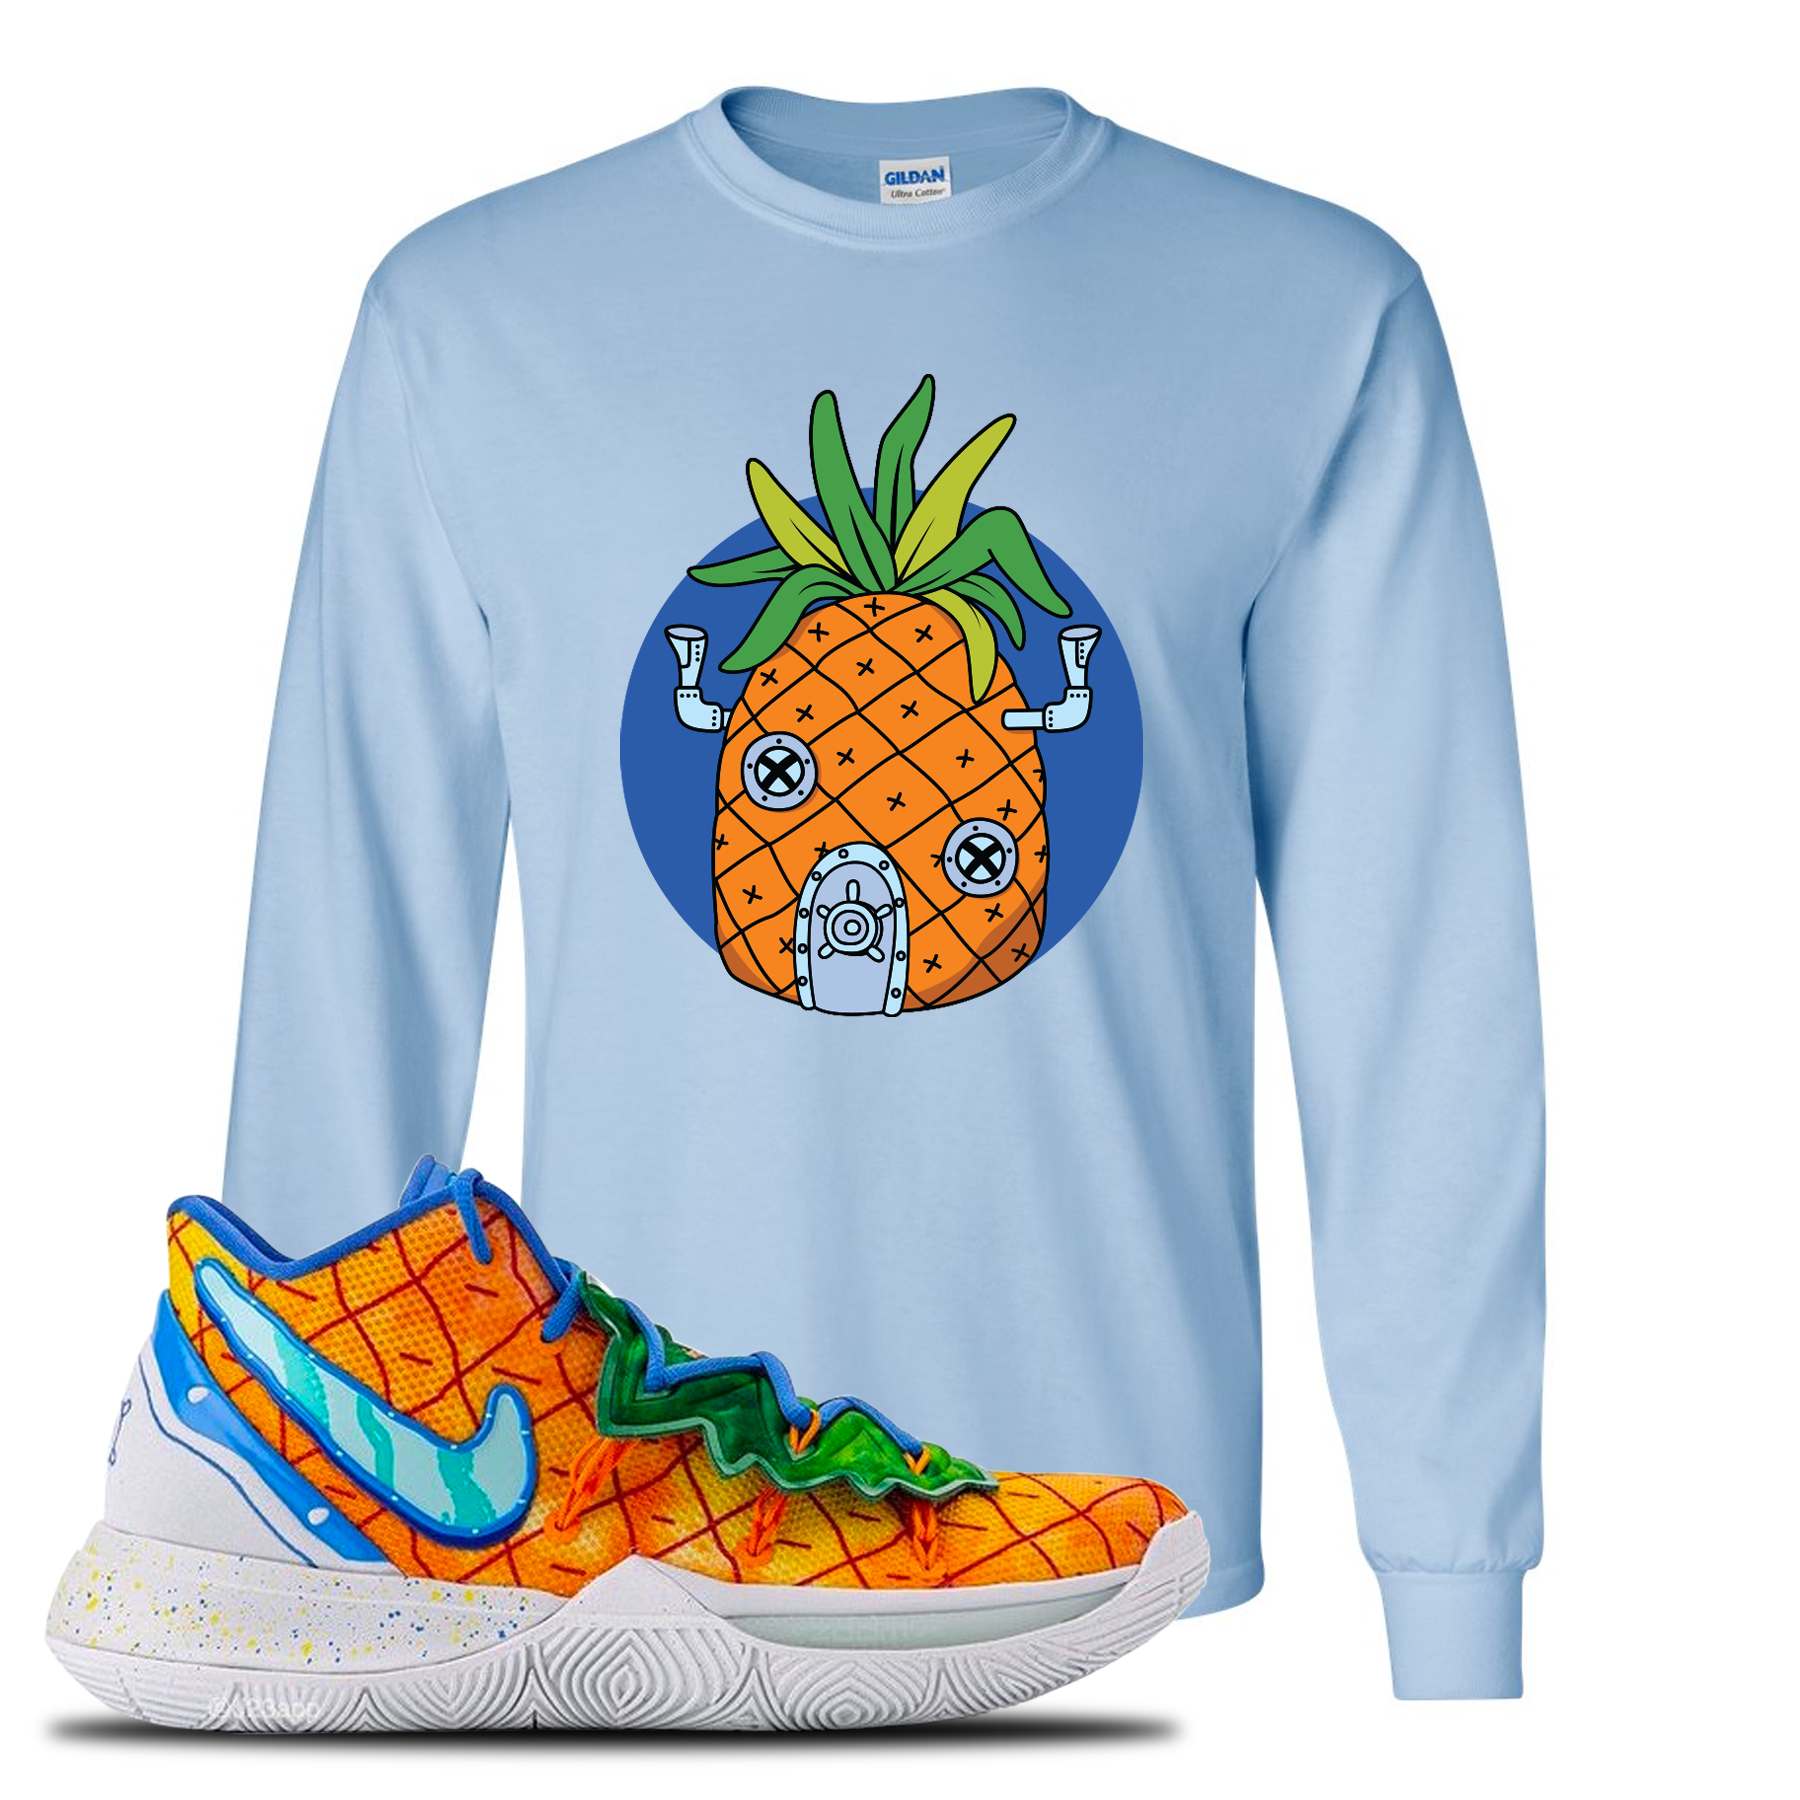 kyrie pineapple shirt